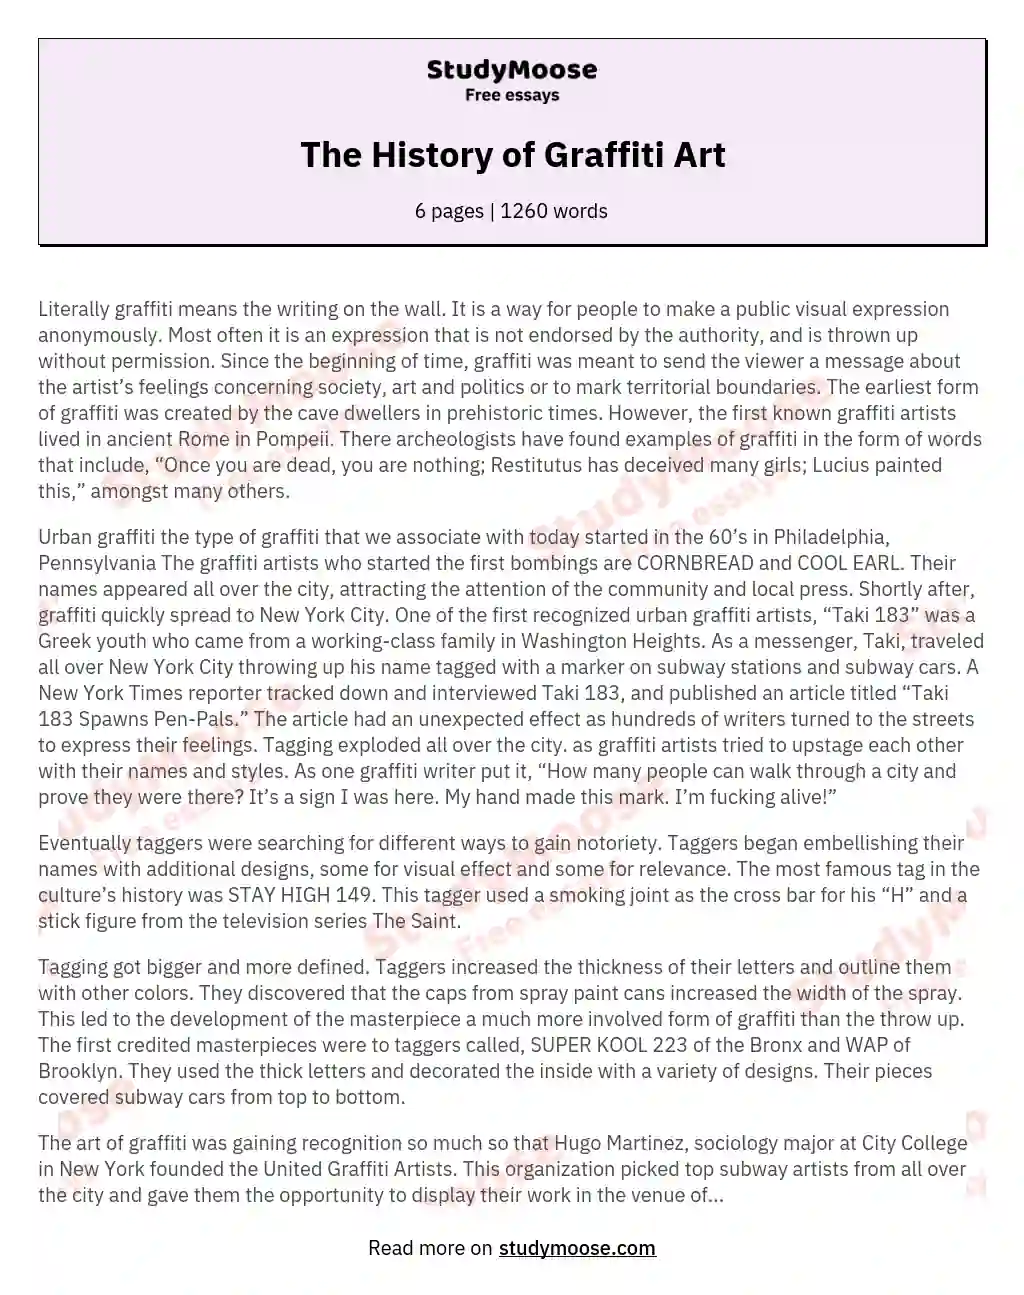 The History of Graffiti Art essay